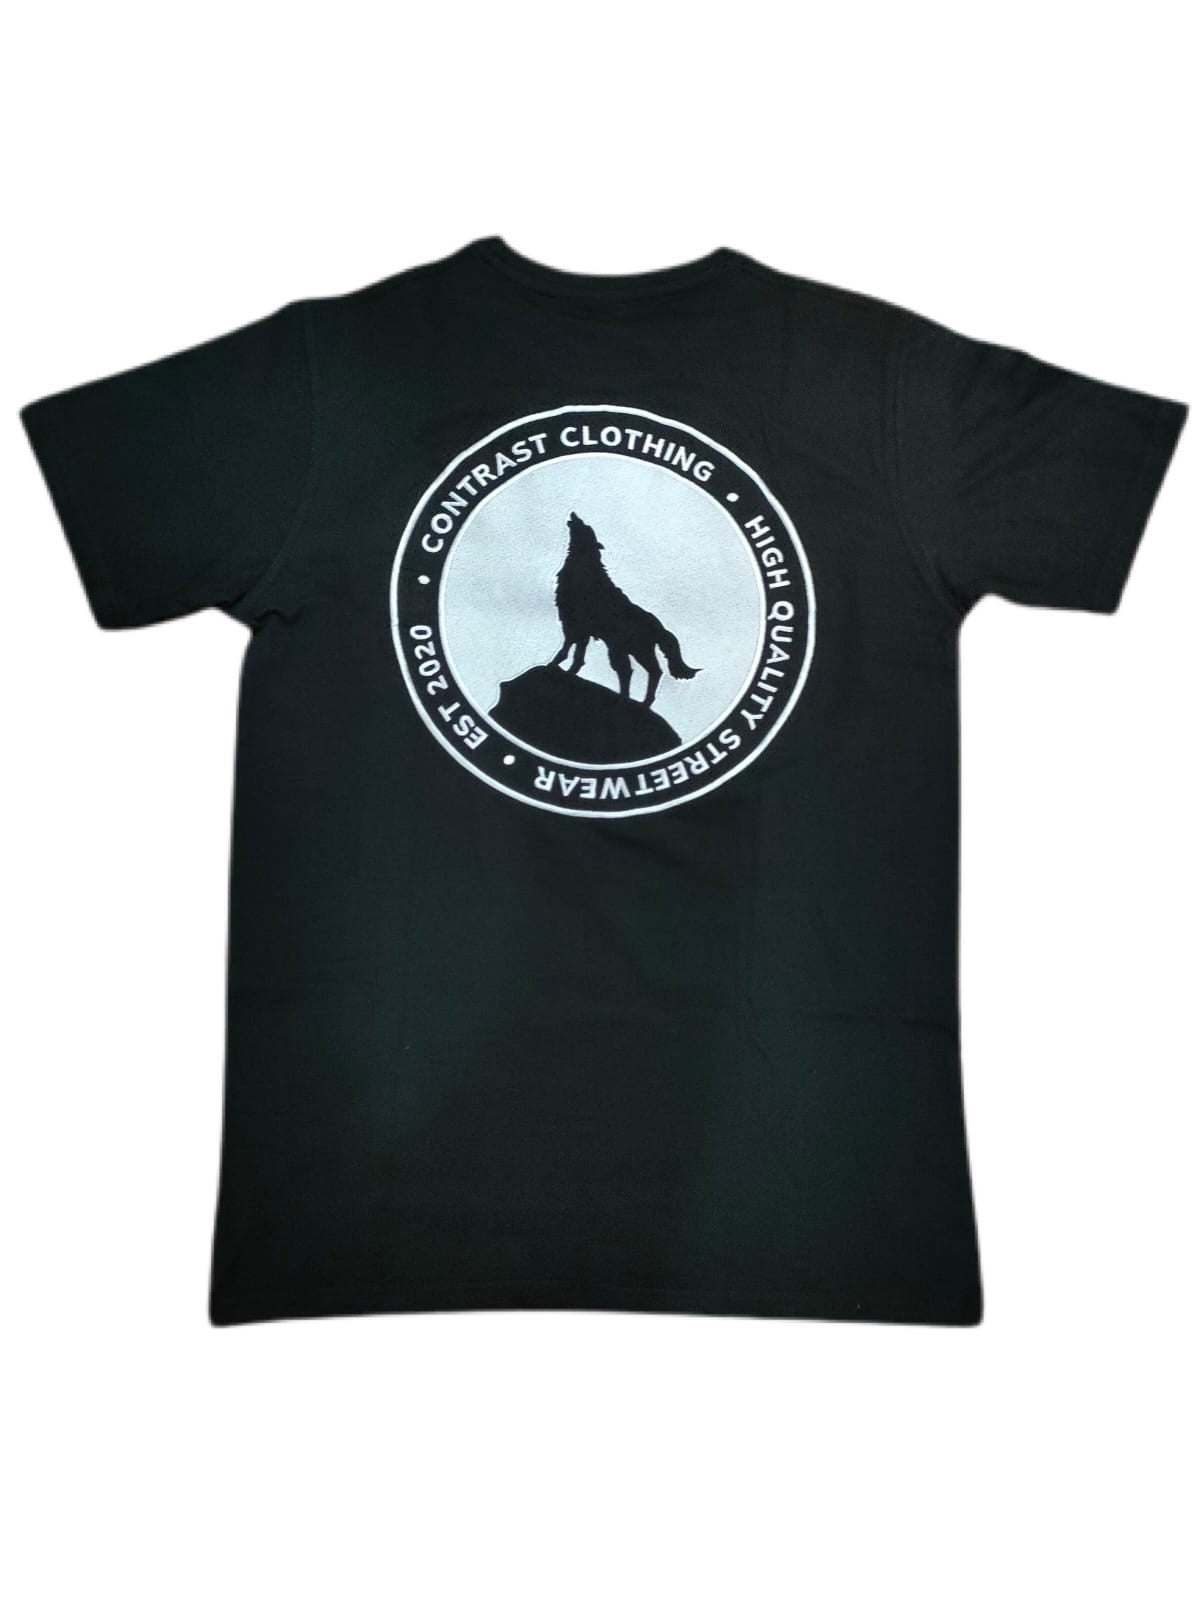 Contrast Clothing Worthing wolf logo tee black 